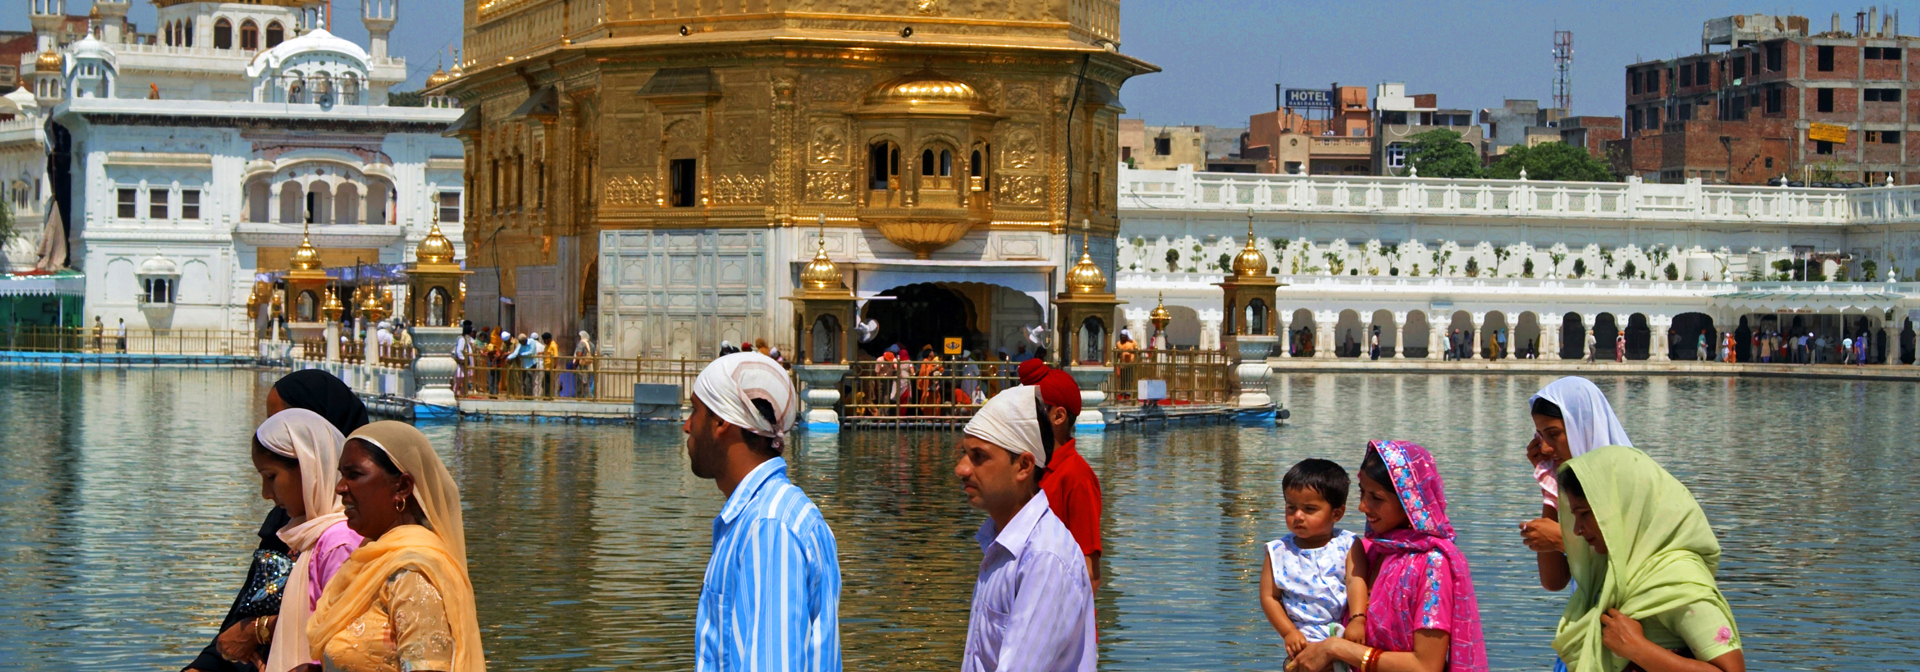 Indien - amritsar_golden temple_03